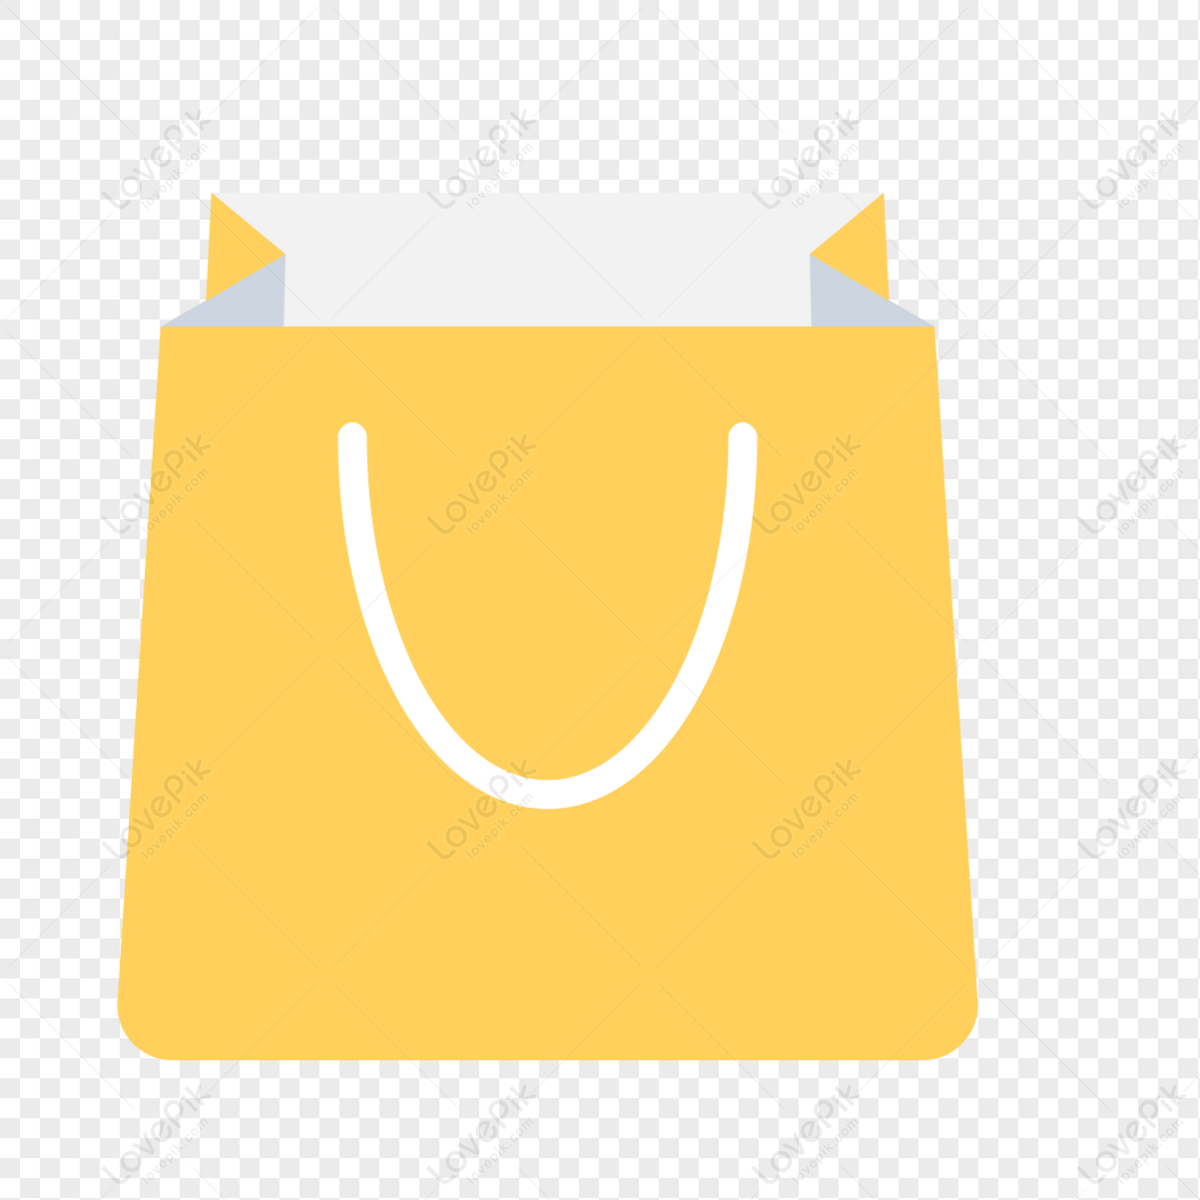 Shopping bag icon in black. Eco paper bag. Handbag icon.